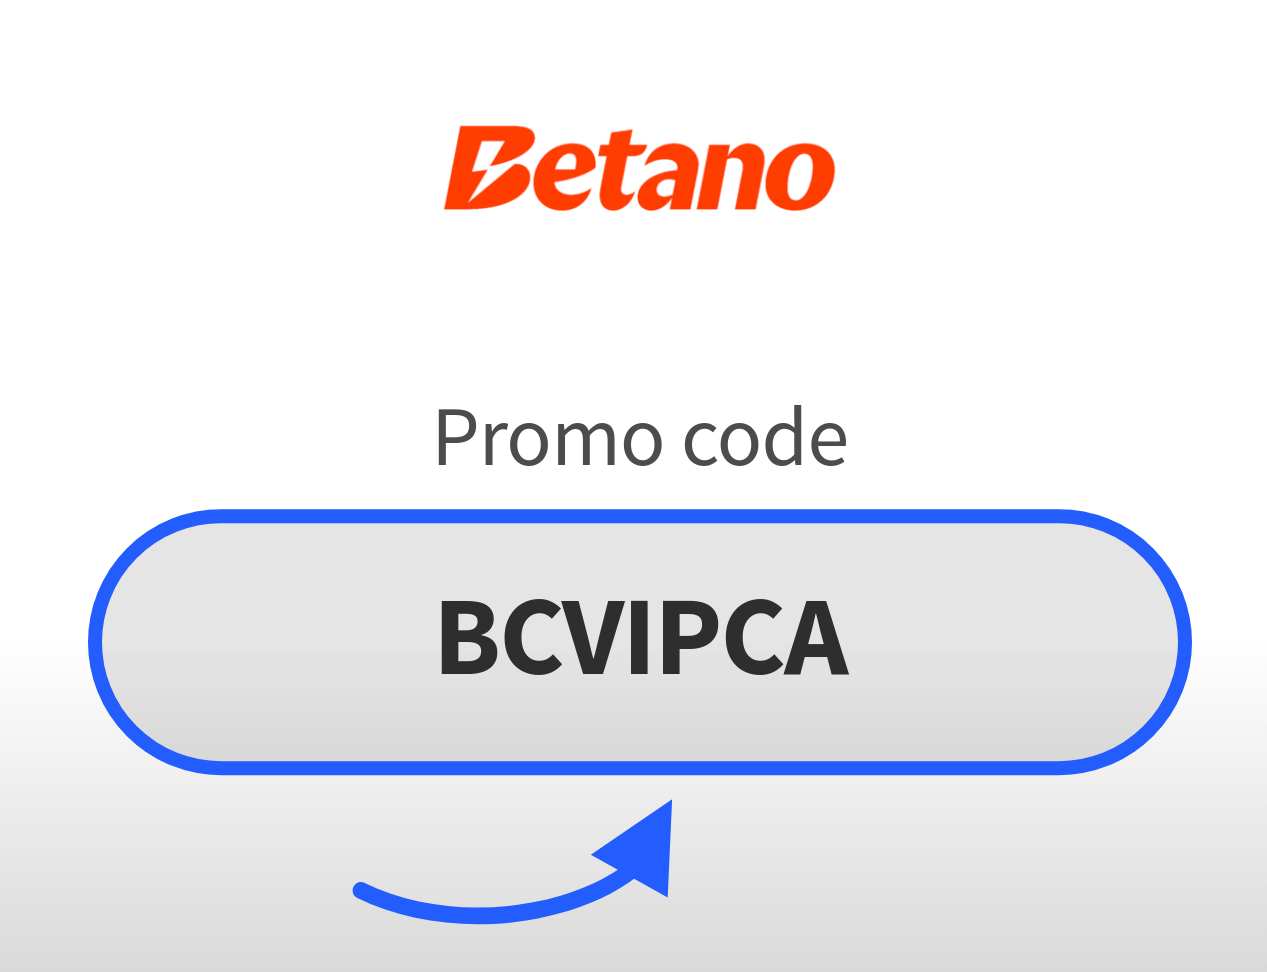 Betano Promo Code Ontario